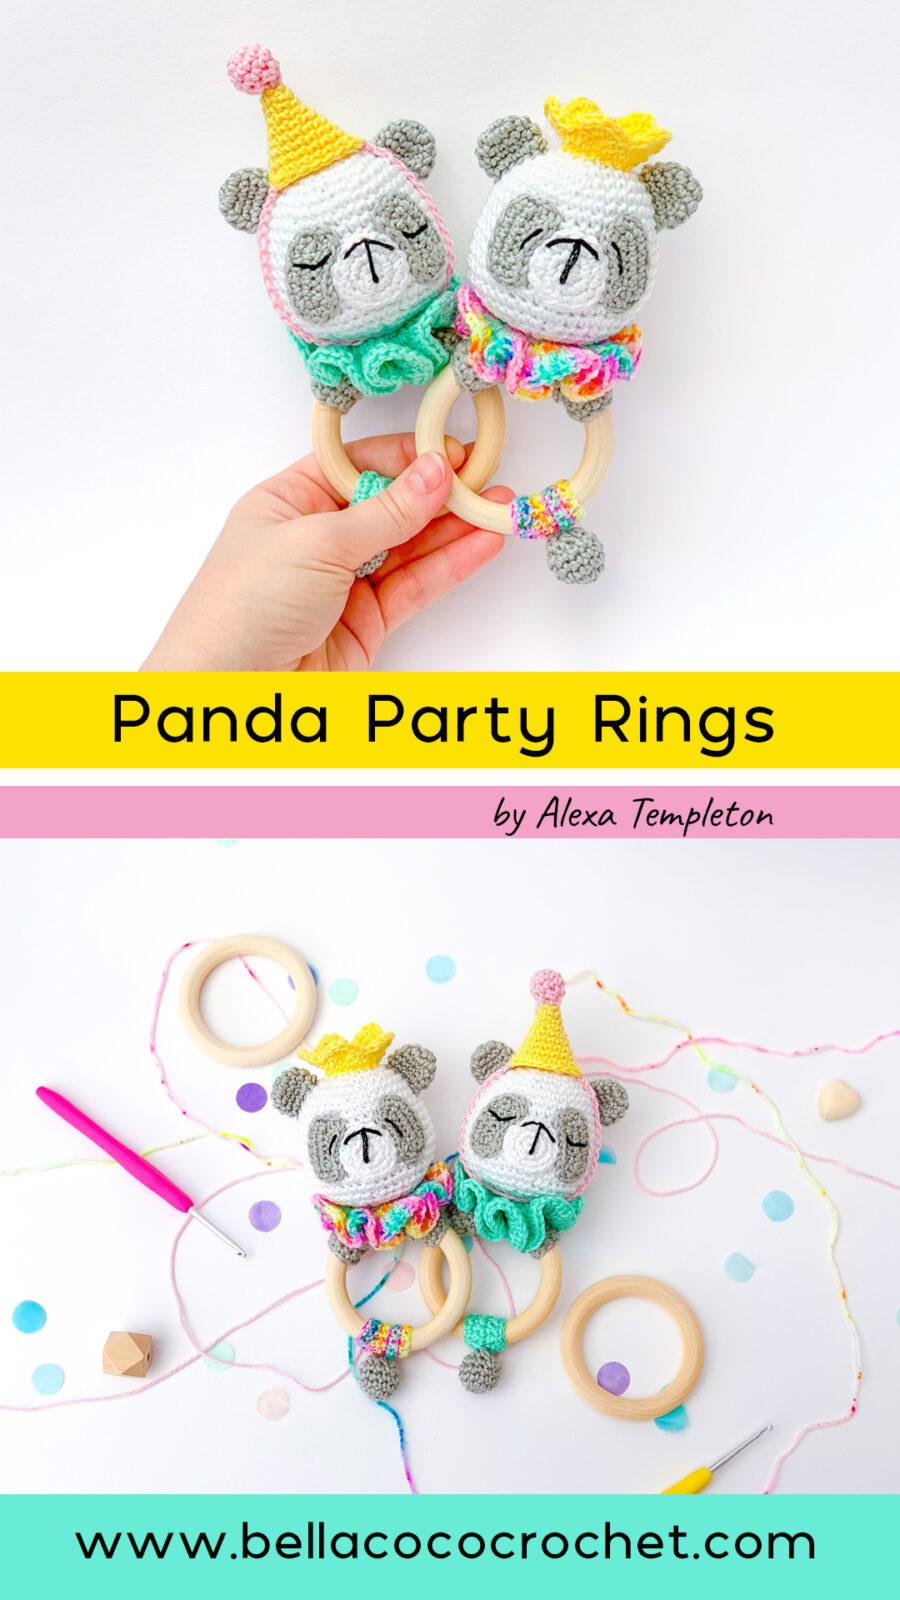 Panda Party Rings by Alexa Templeton